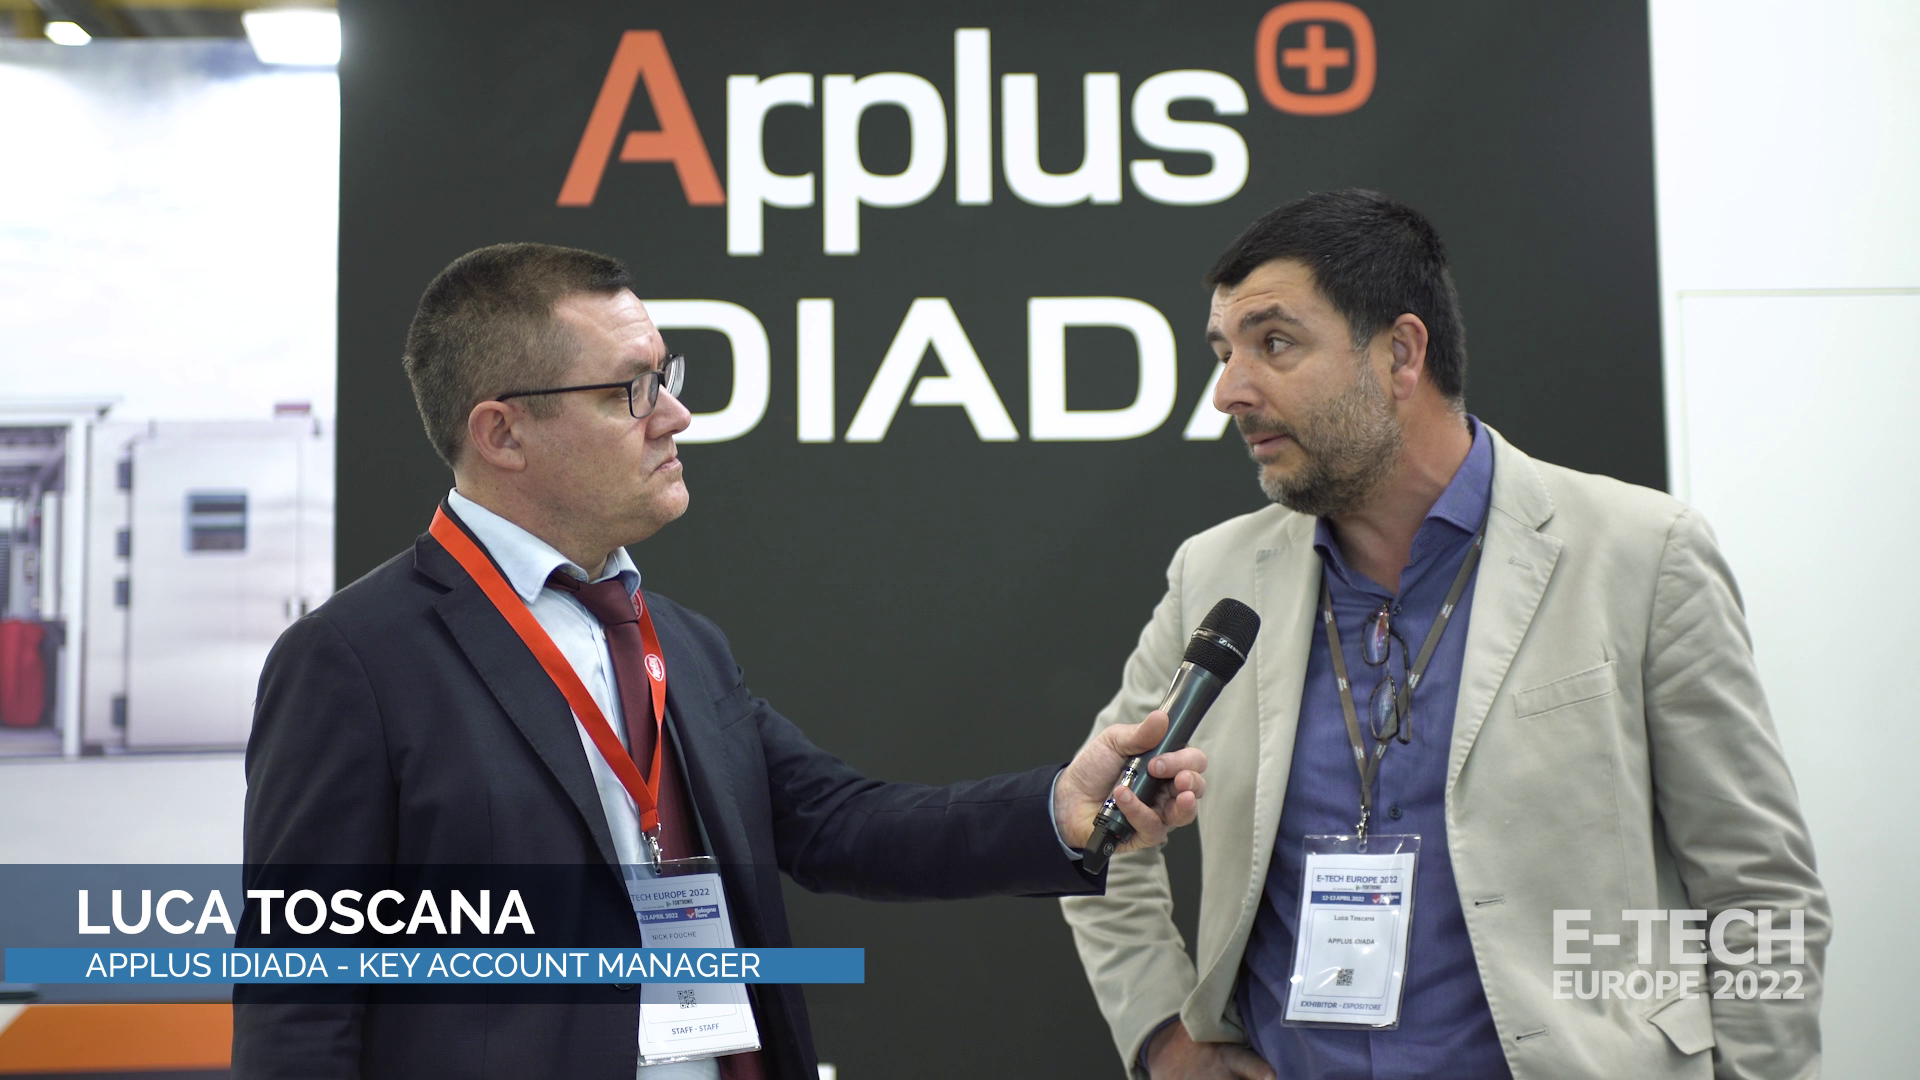 E-Tech Europe 2022, Bologna – APPLUS IDIADA – Interview – Official Video